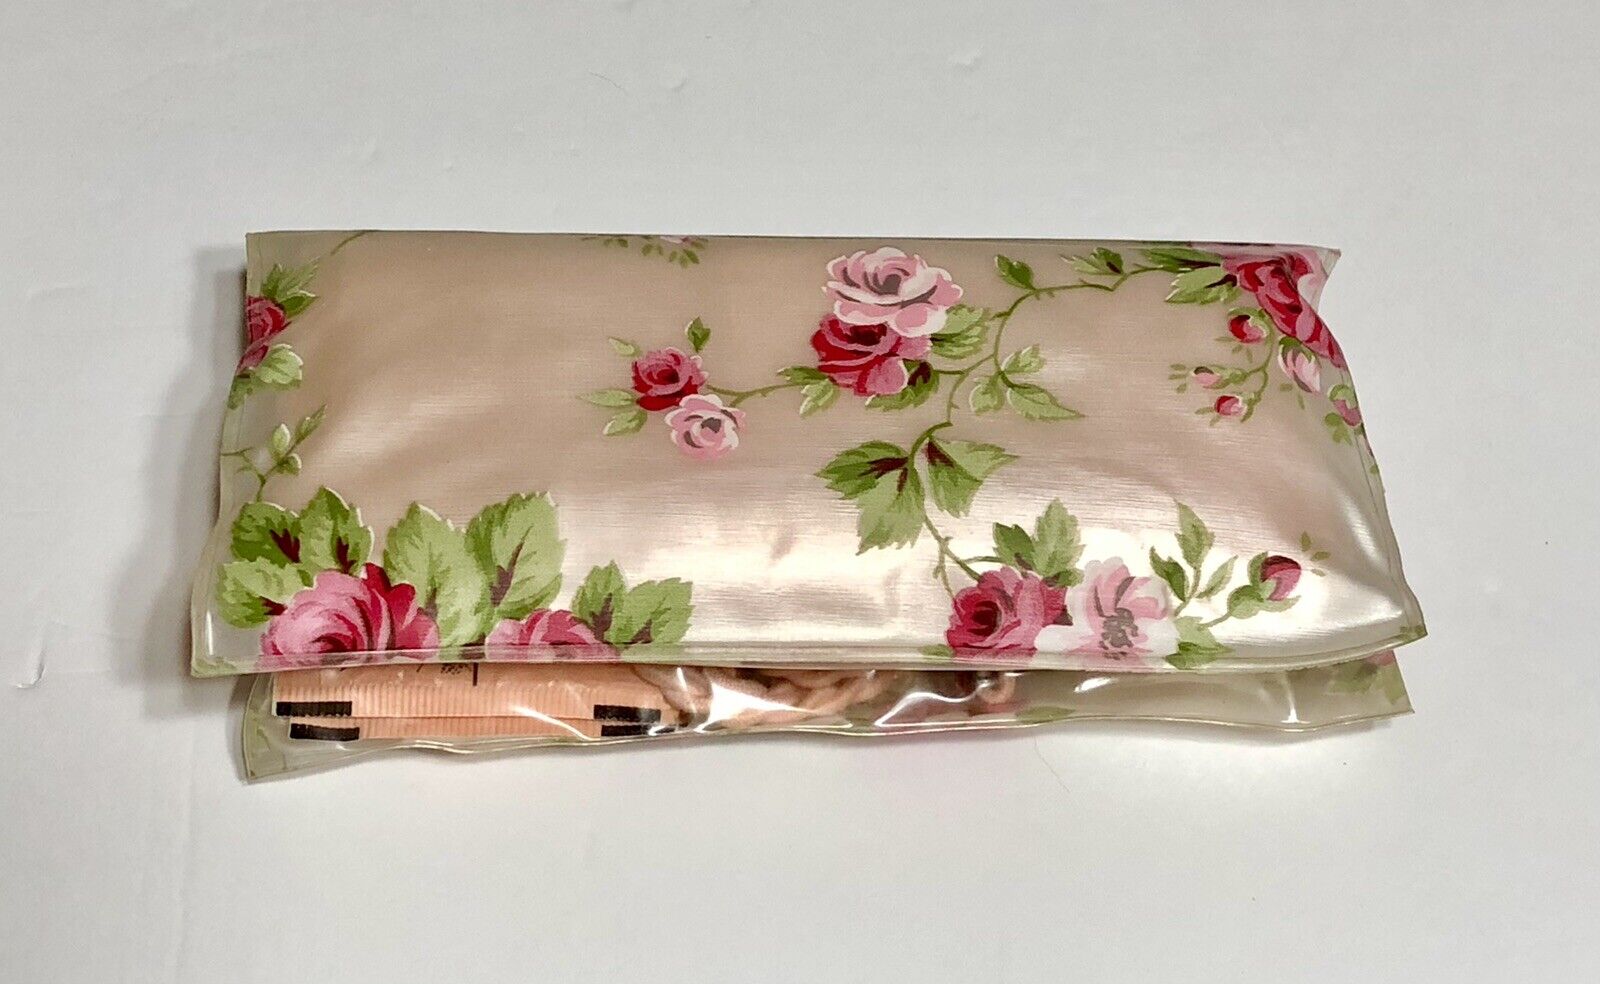 VTG 1950s Celebrity Pink Floral Travel Kit Case Sewing Laundry Line Soap NYC